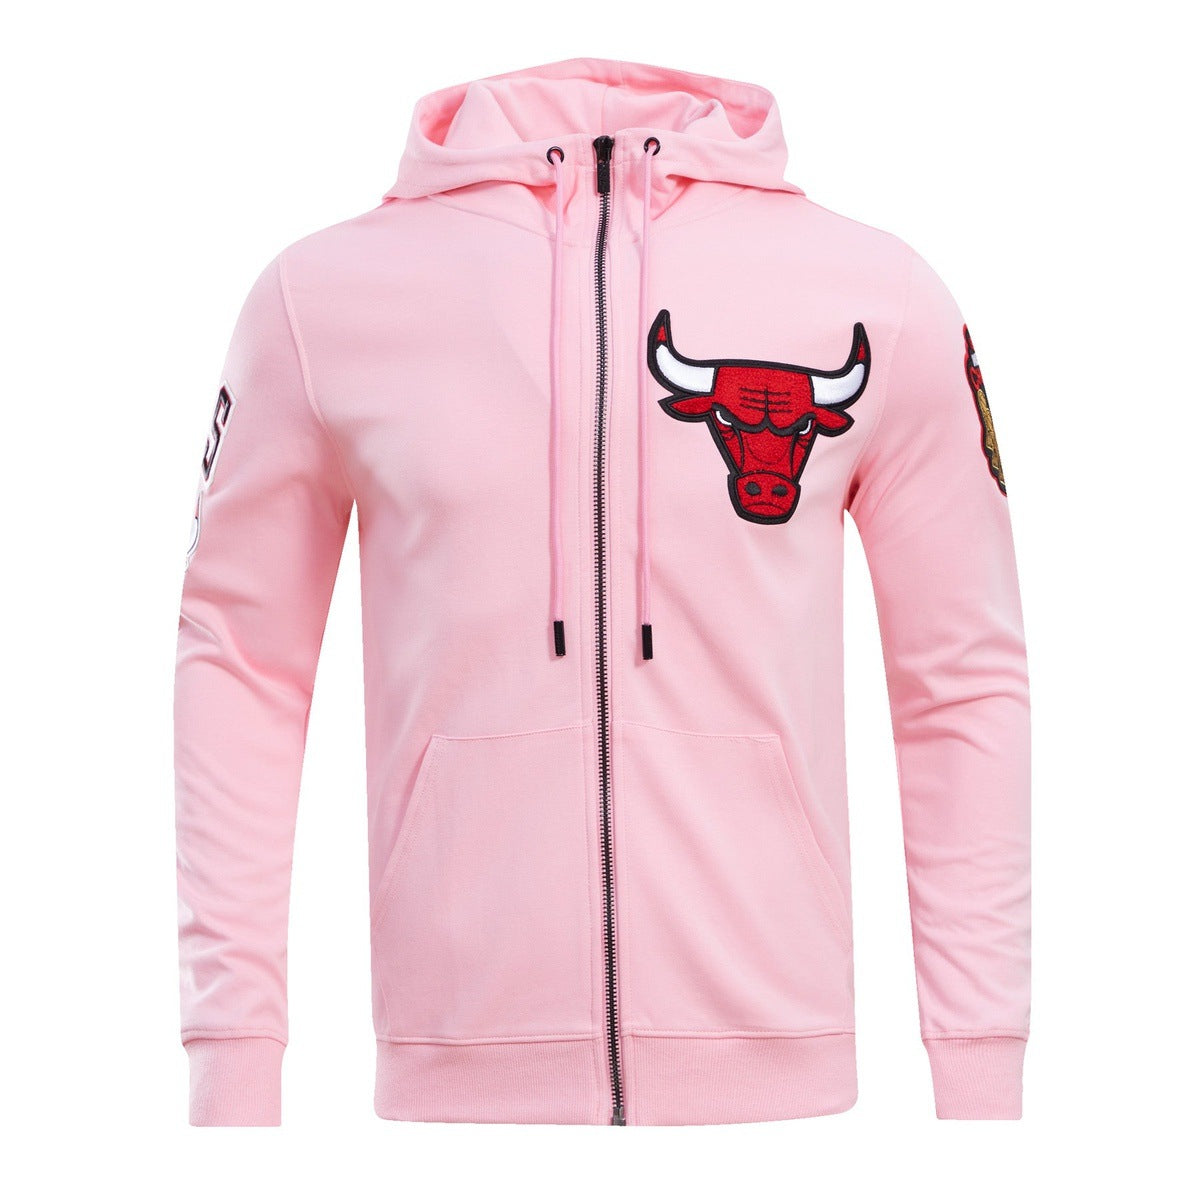 Shop Pro Standard Chicago Bulls Logo Mashup Hoodie BCB554168-BKR black